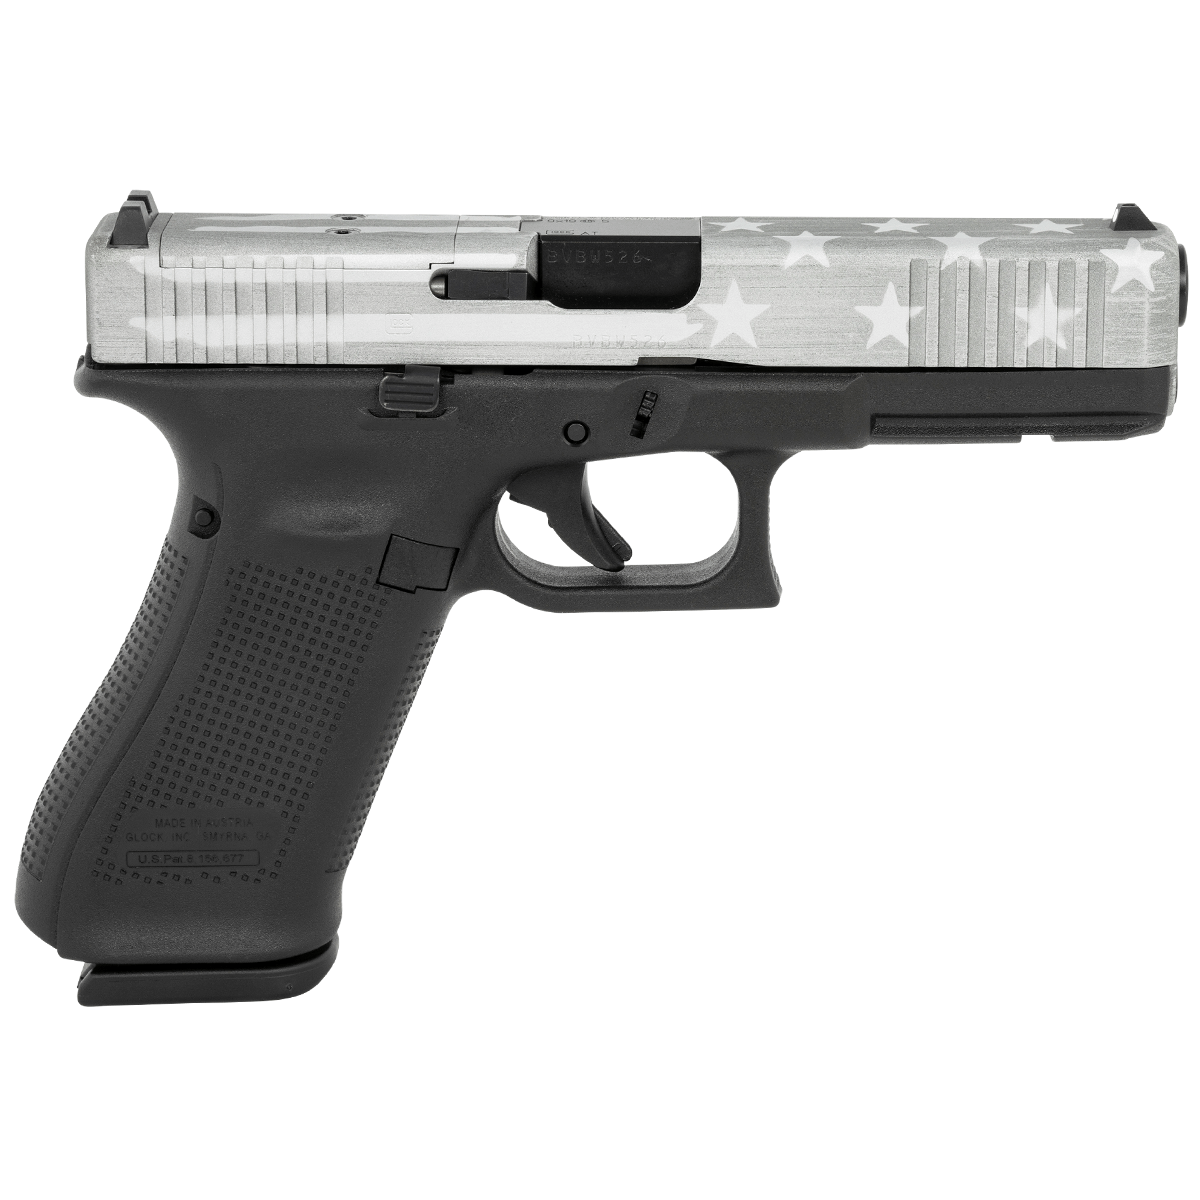 GLOCK 19 Gen5 9mm Semi-Auto Pistol